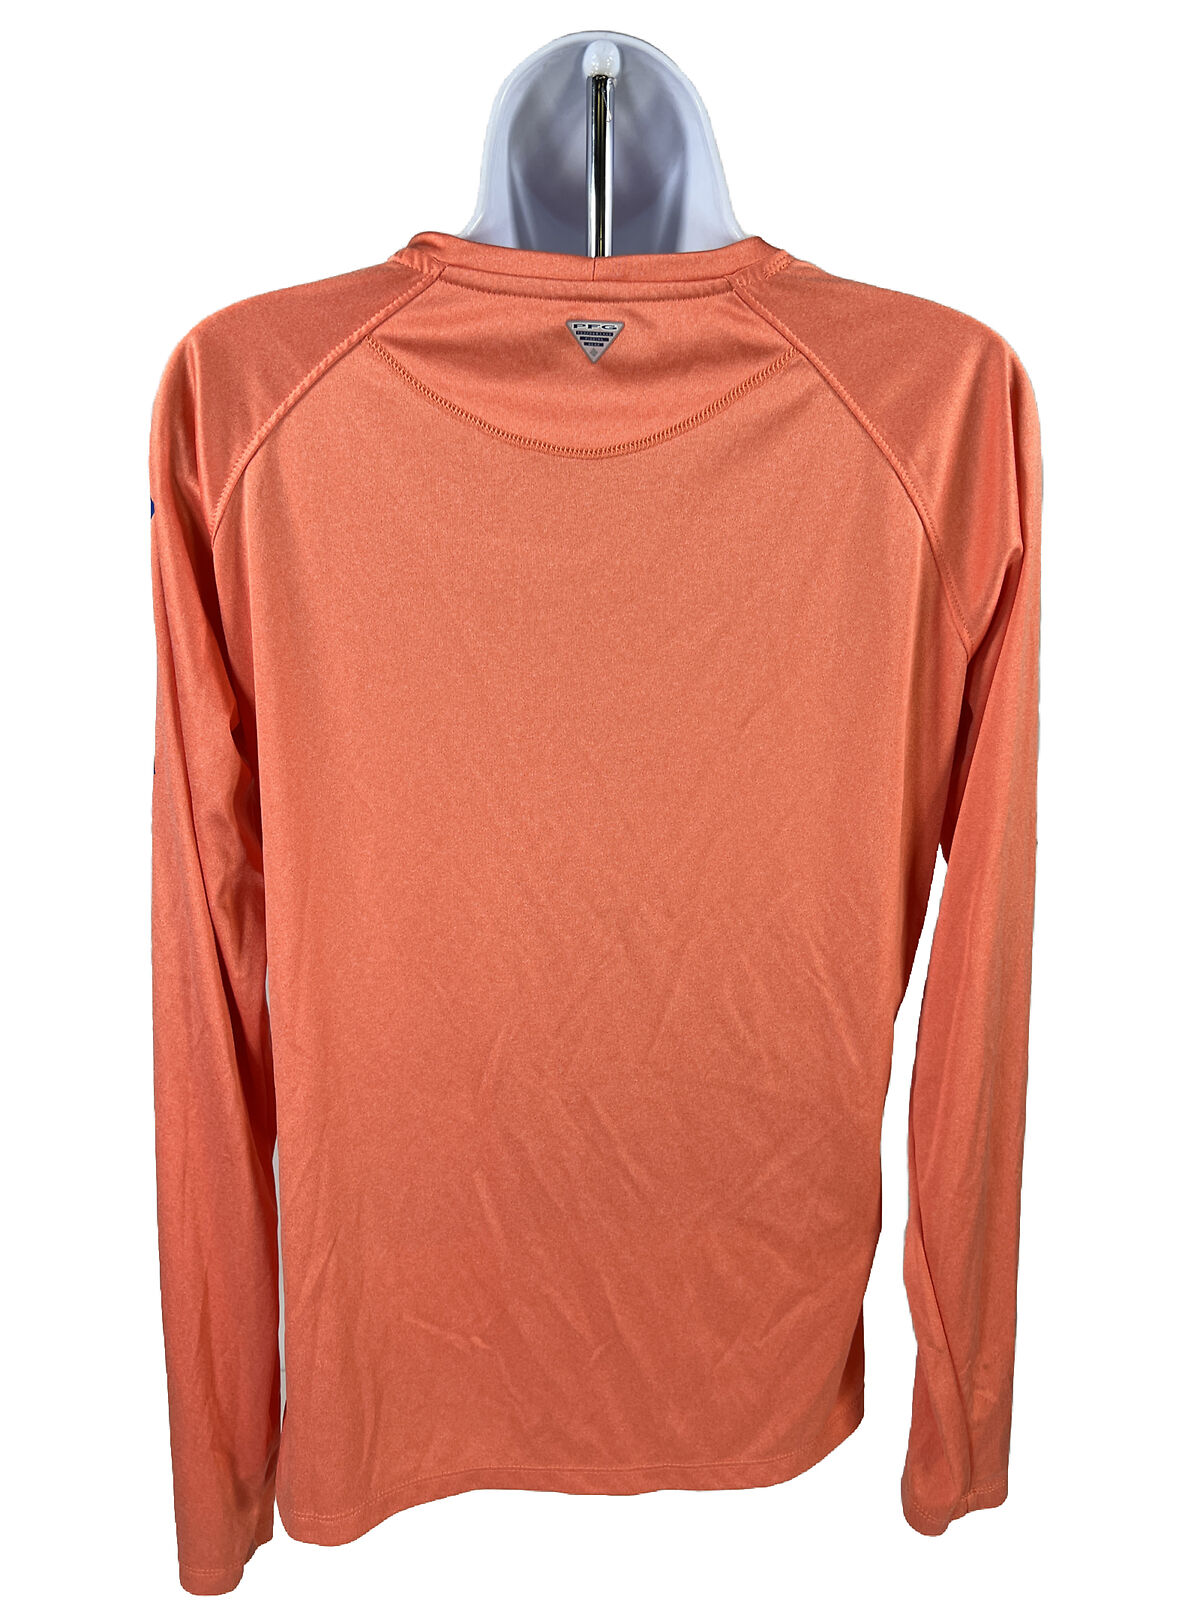 Columbia Women's Orange PFG Tidal Tee Long Sleeve Athletic Shirt - M